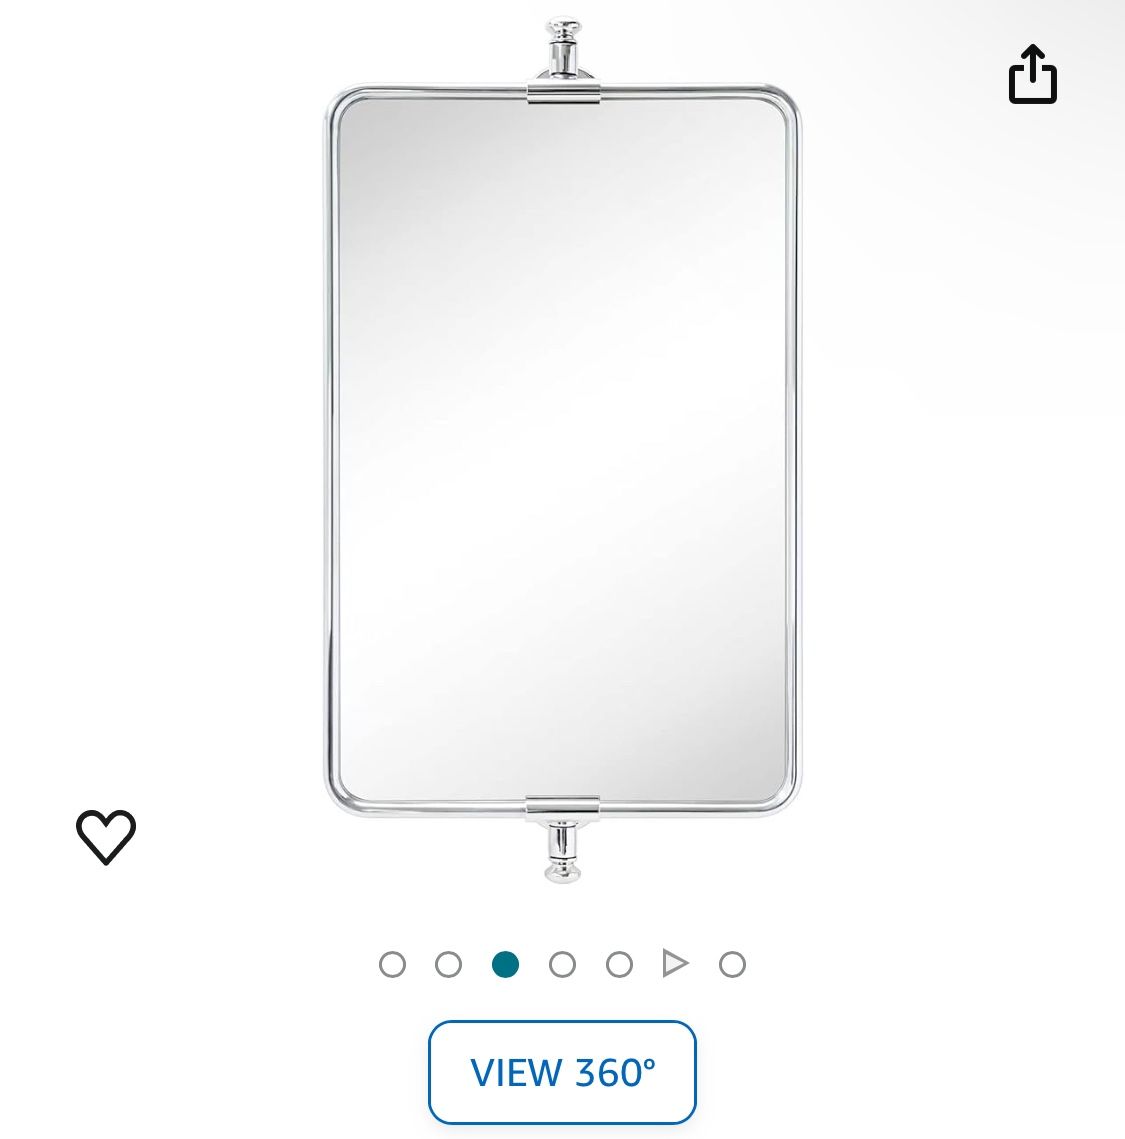 Correon Pivot-N-View Rectangle Mirror for Window Bathroom Vanity - 14" x 22" - Chrome